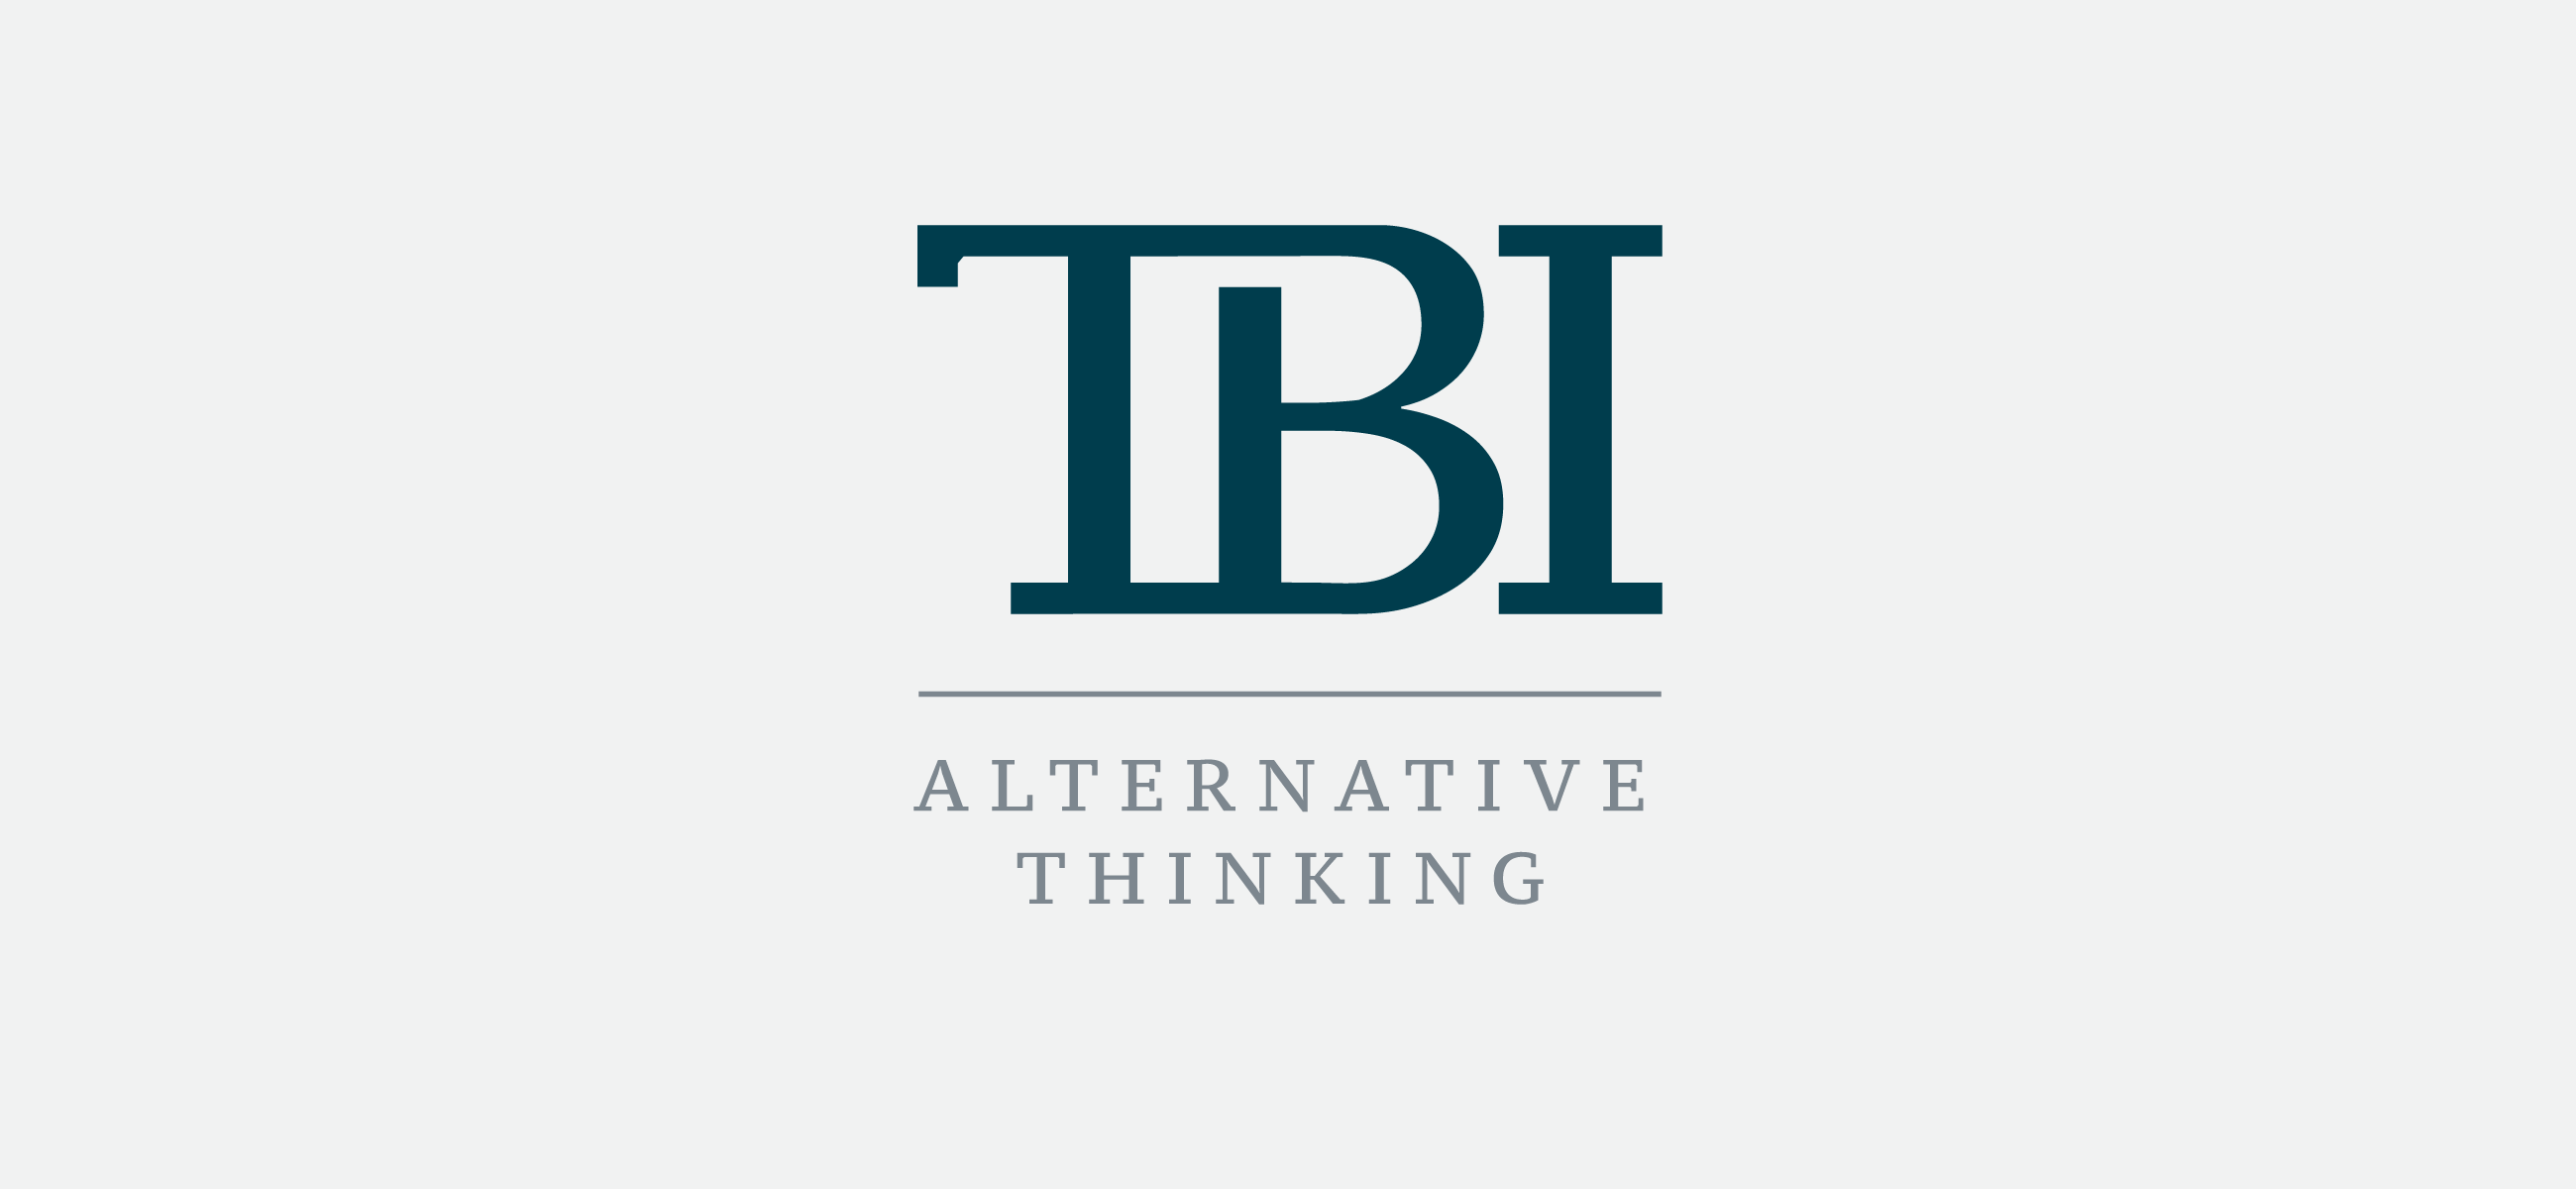 TBI Logo - TBI | Sherpa | Brand & Design Agency